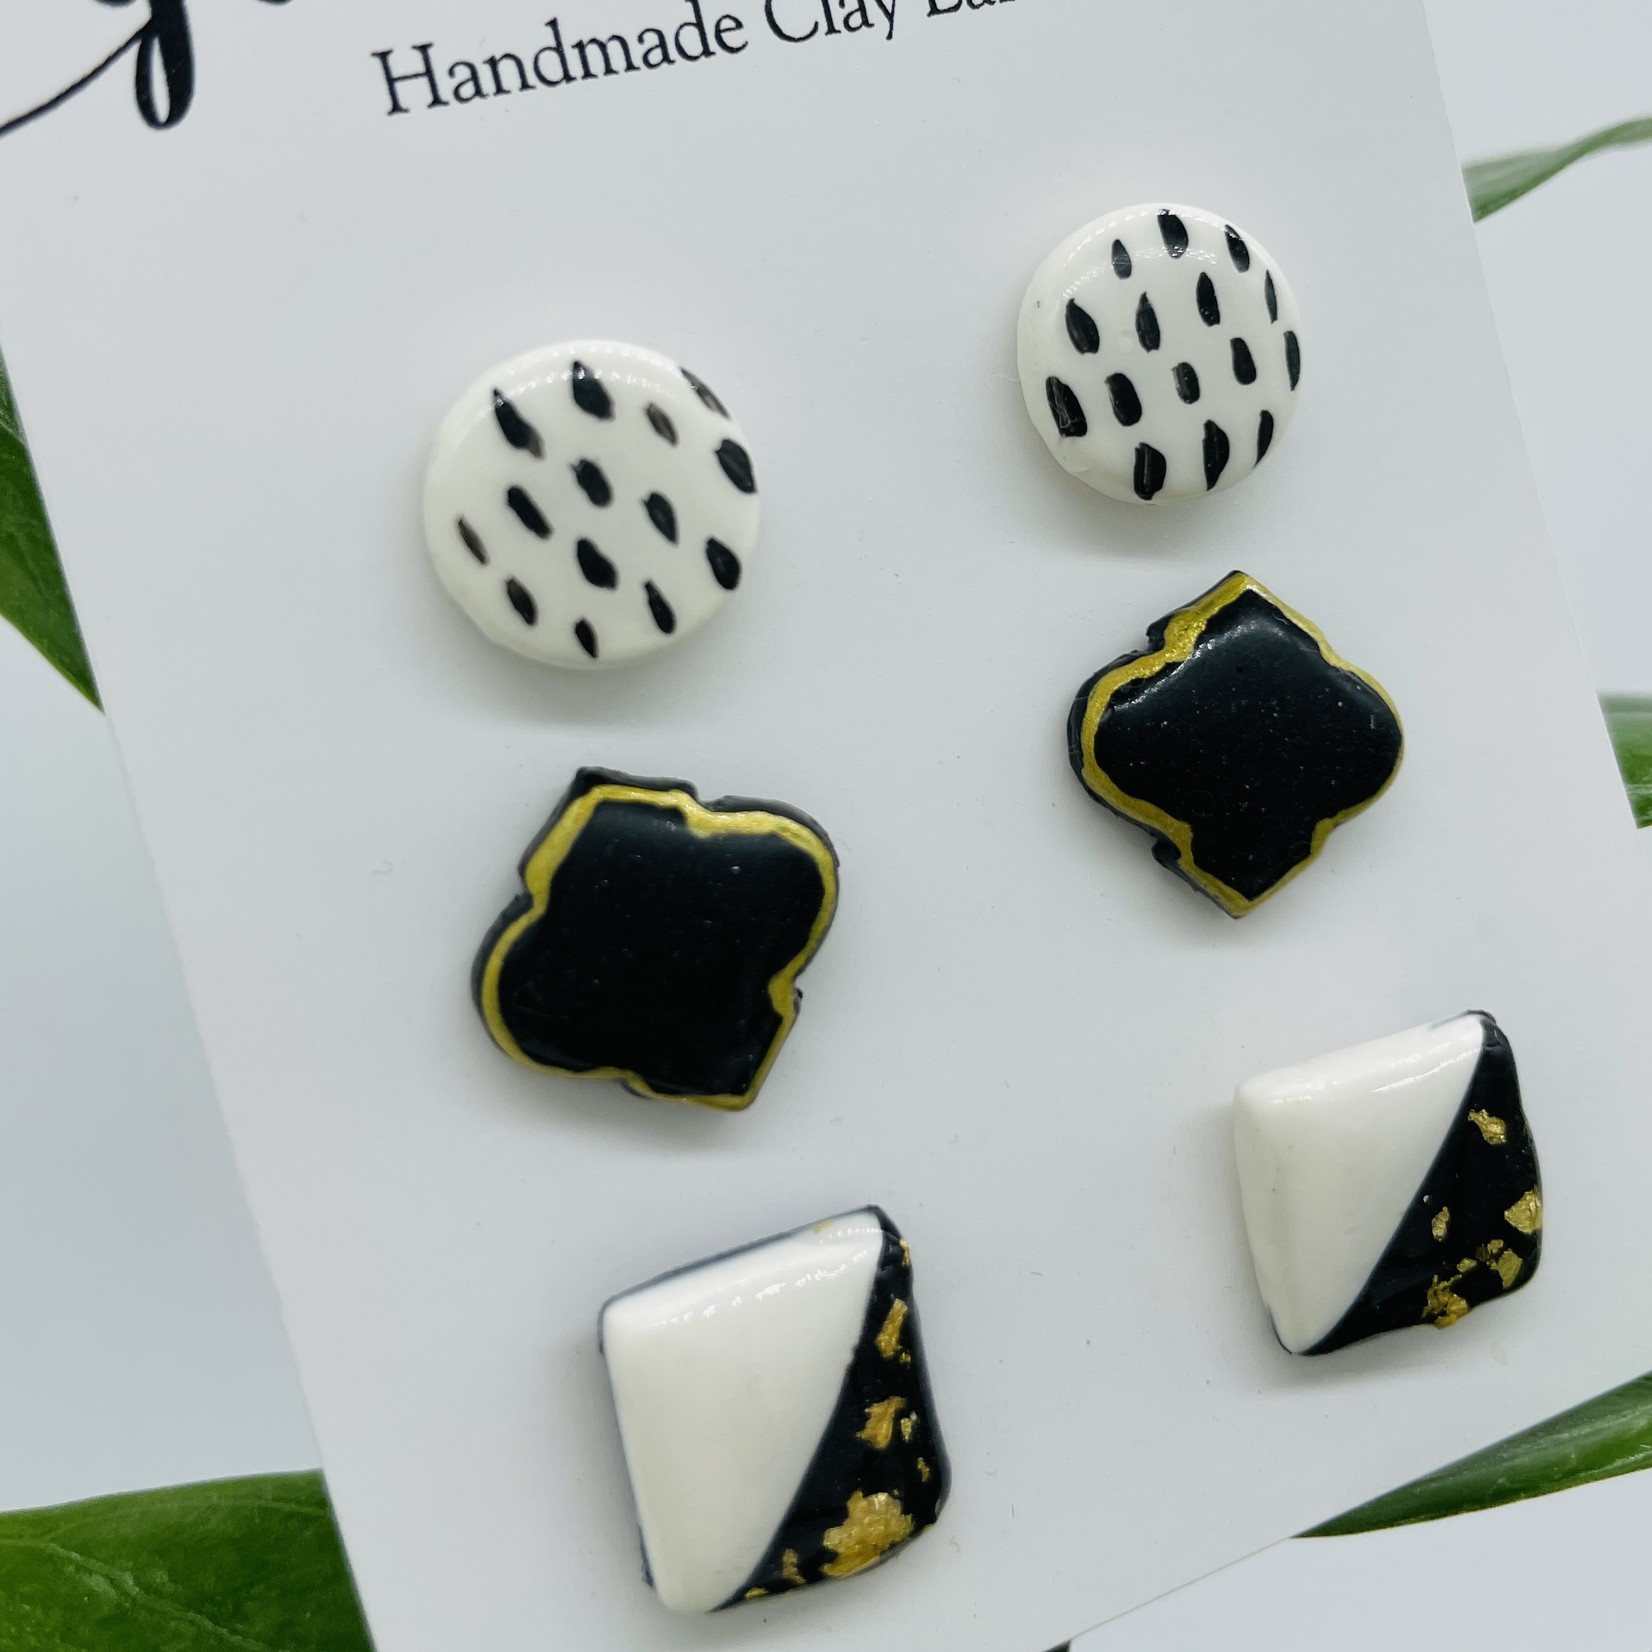 Clay Jewelry Handmade 3 pack White Black Gold Stud Earrings